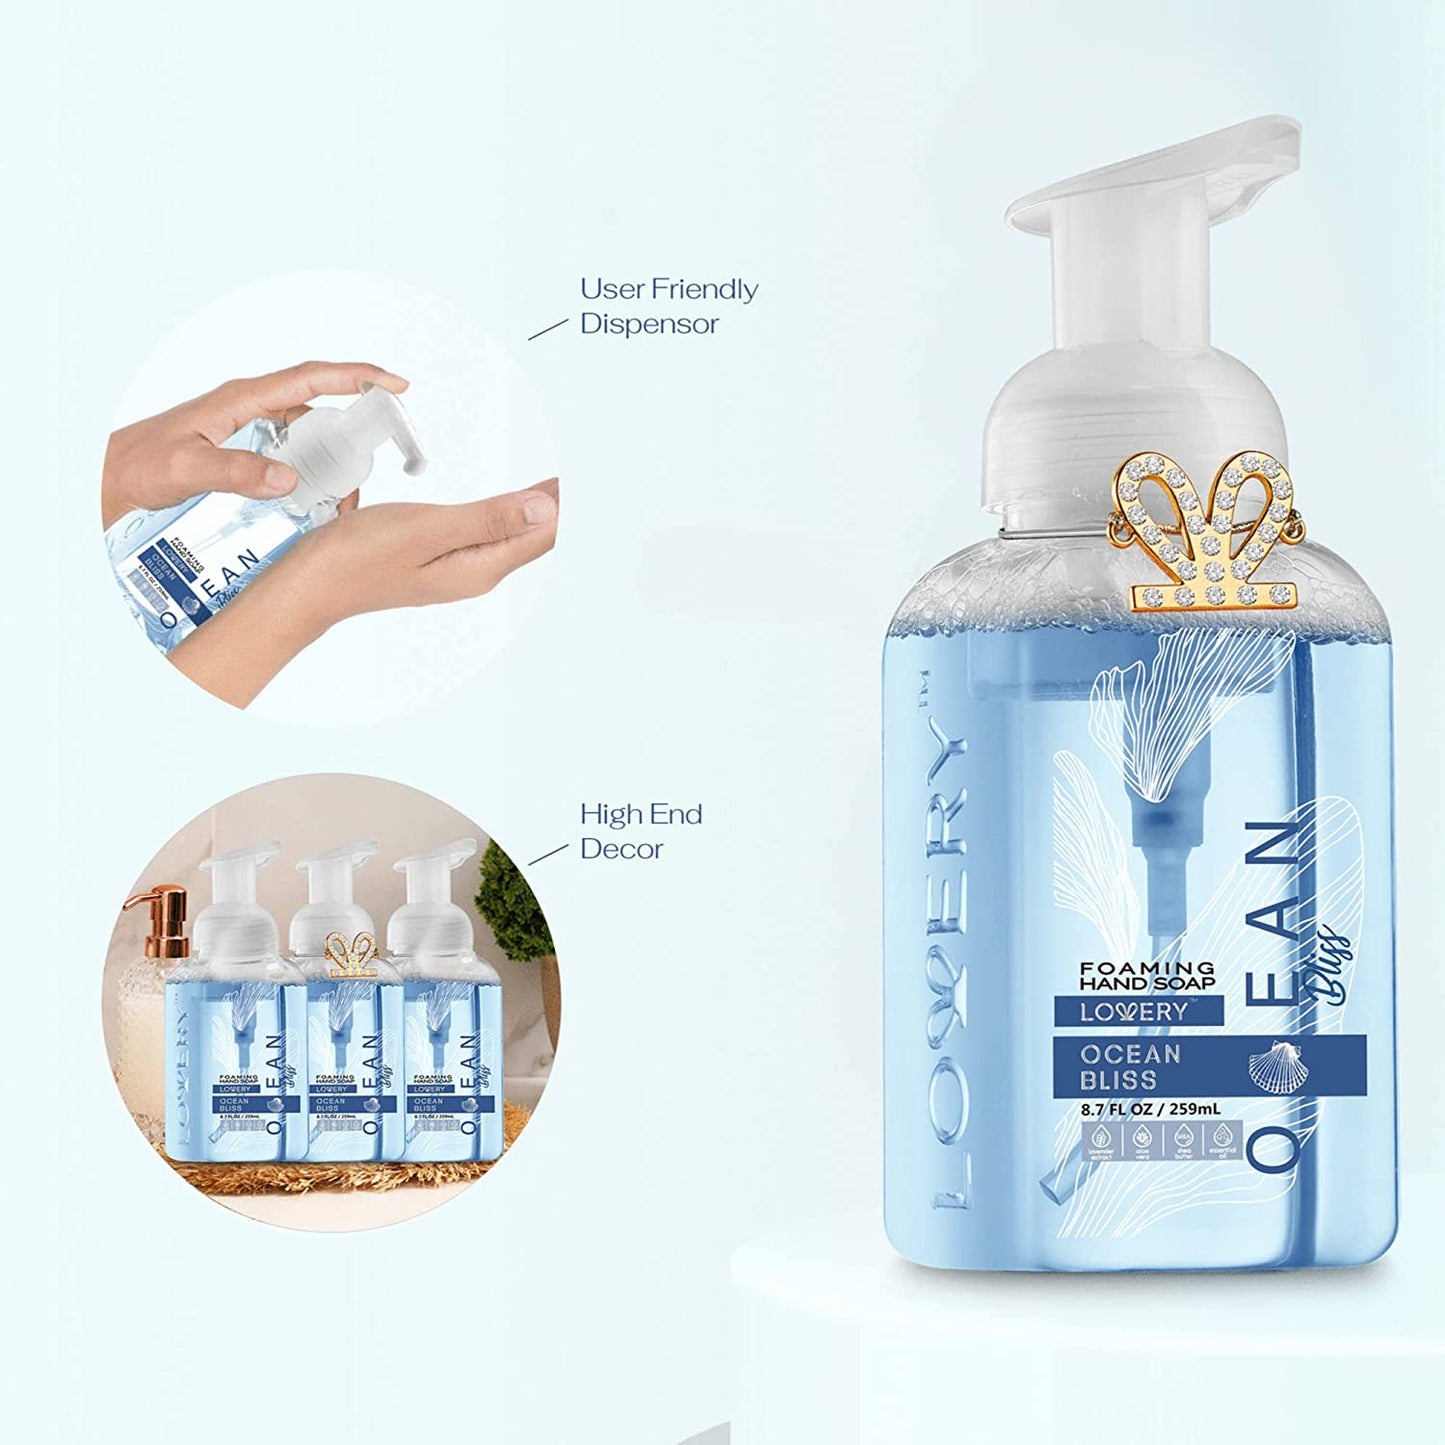 Ocean Bliss Foaming Hand Soap - Pack of 3